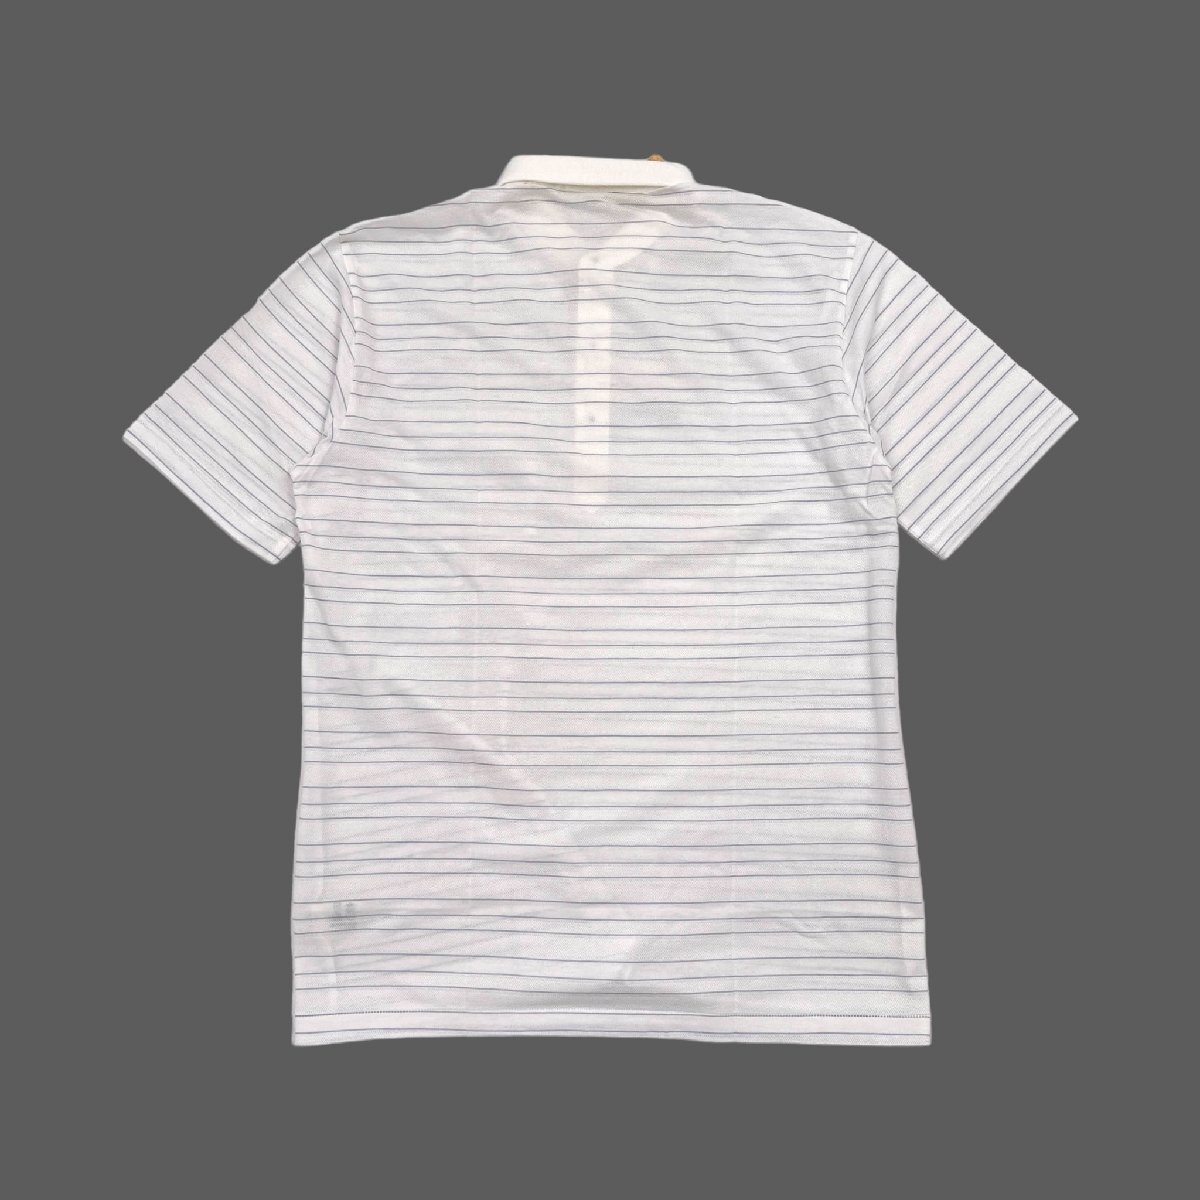  unused!! tag attaching *Munsingwear grandoslam Munsingwear wear border pattern polo-shirt with short sleeves L size / white group white / men's sport Golf 